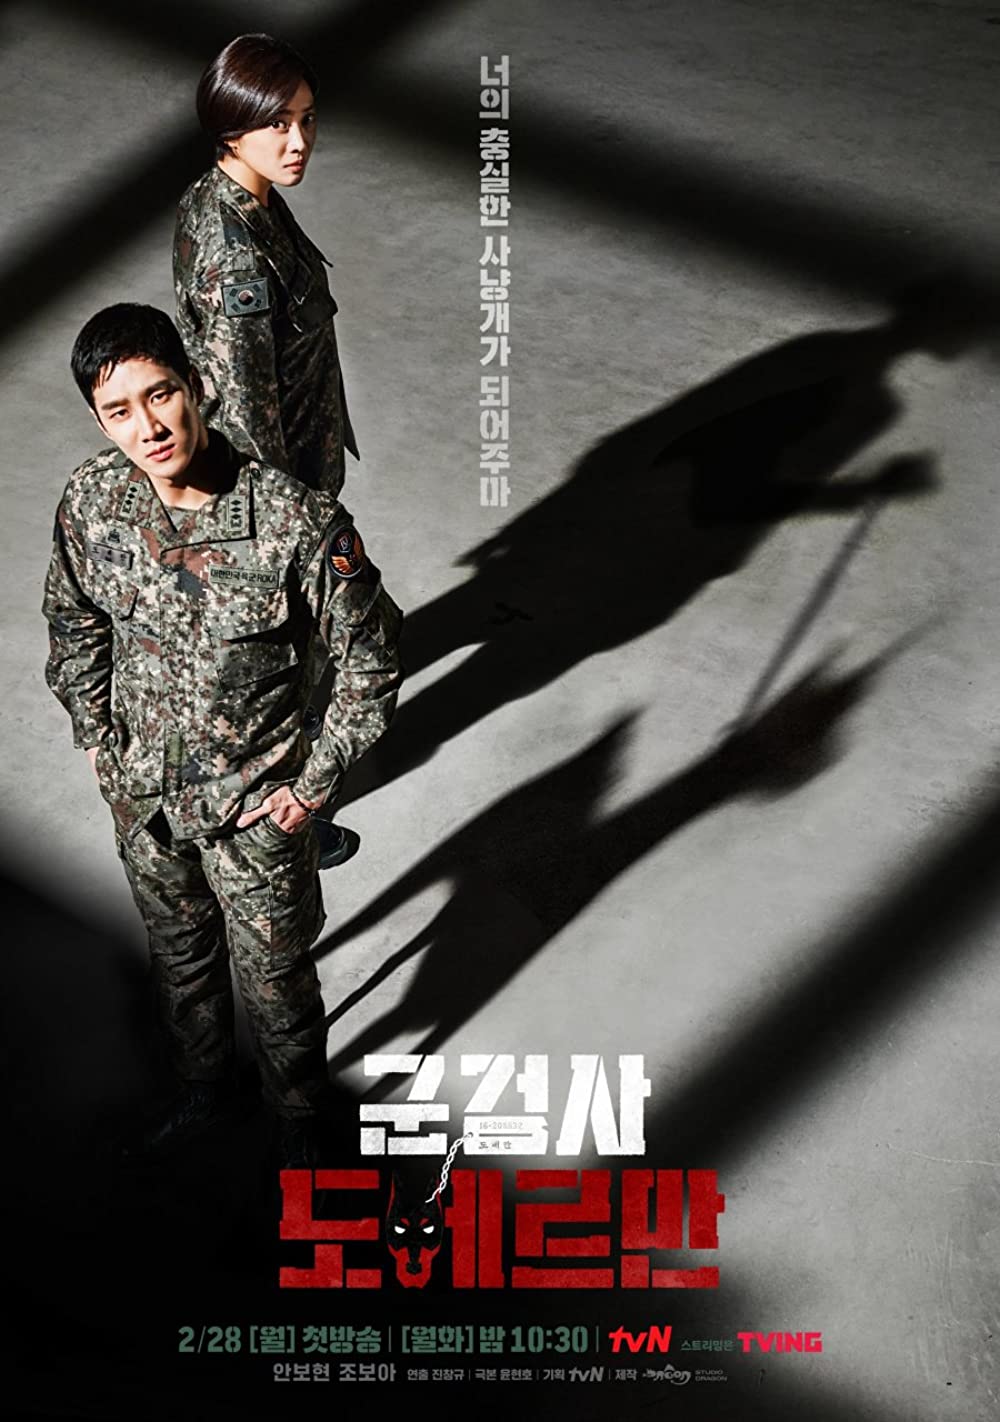 7 Drama Korea romantis rating tertinggi awal 2022, penuh cerita kocak